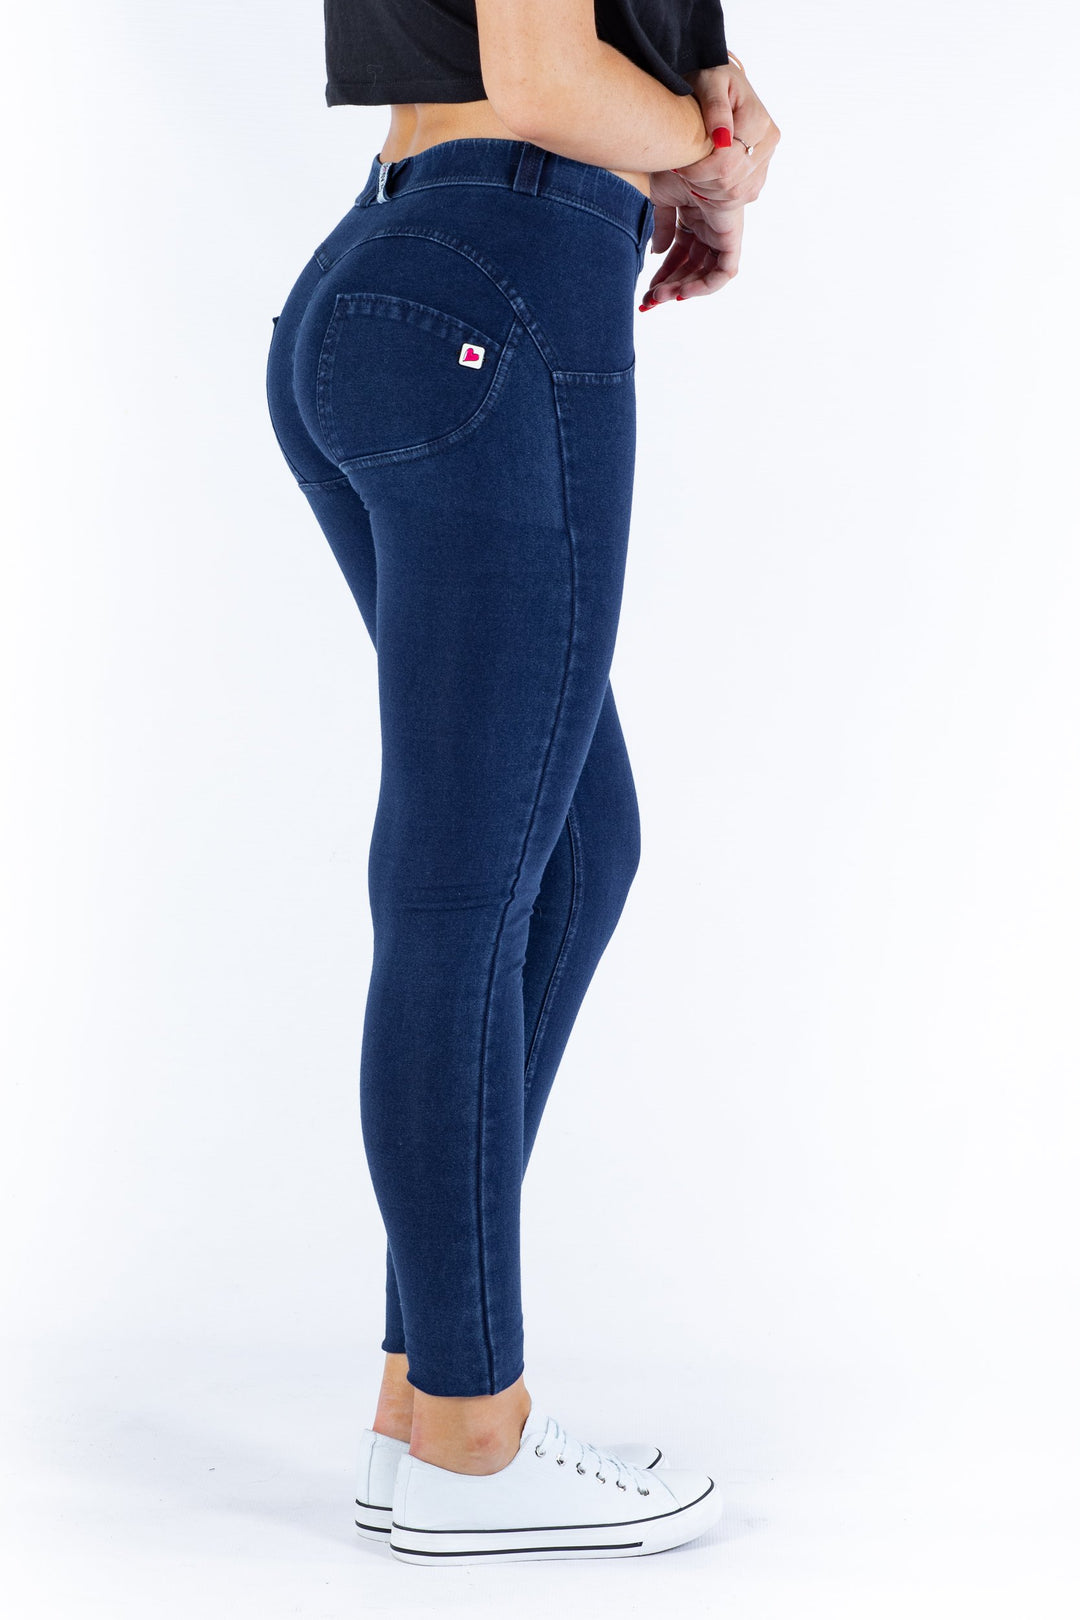 Shop For Butt Shaping Jeans/Jeggings Online – Tagged XXL– Shape Wear Shop